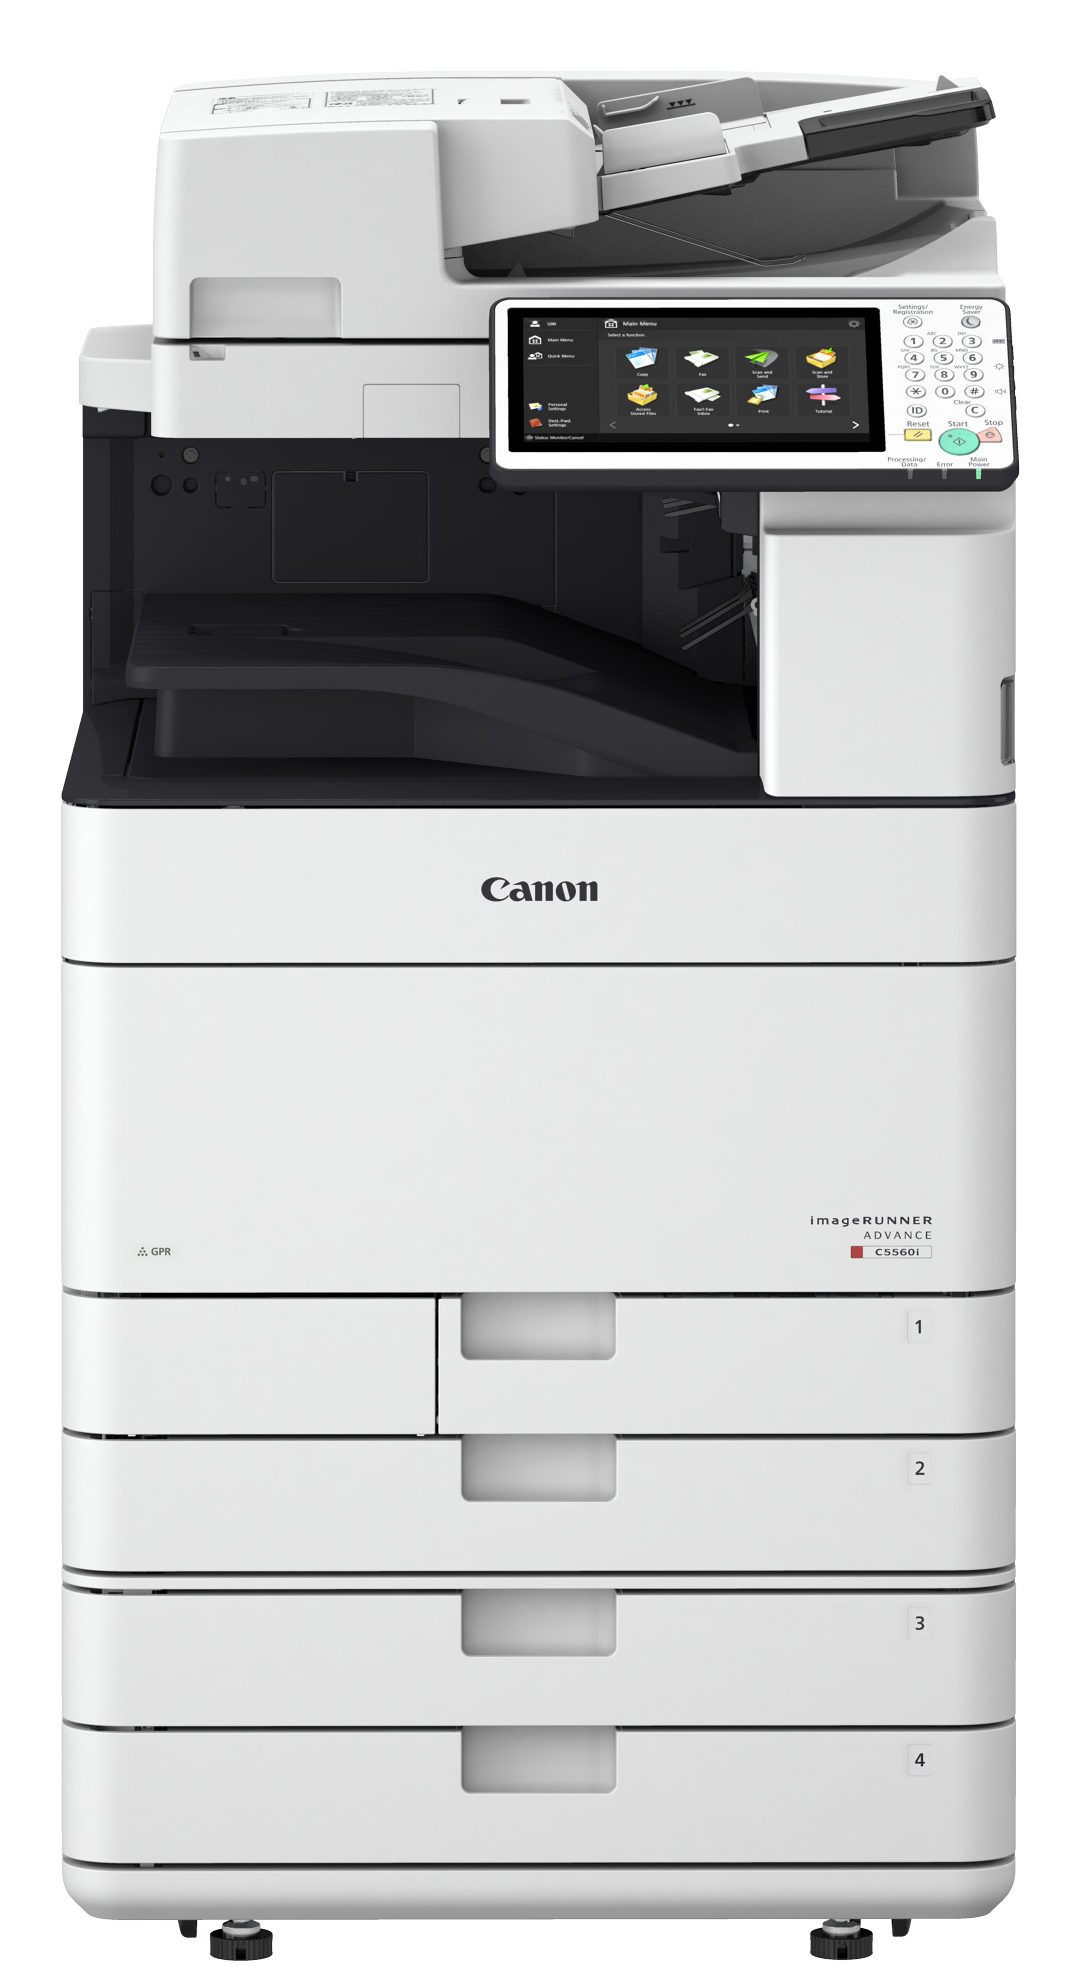 Canon ir c3080 printer drivers